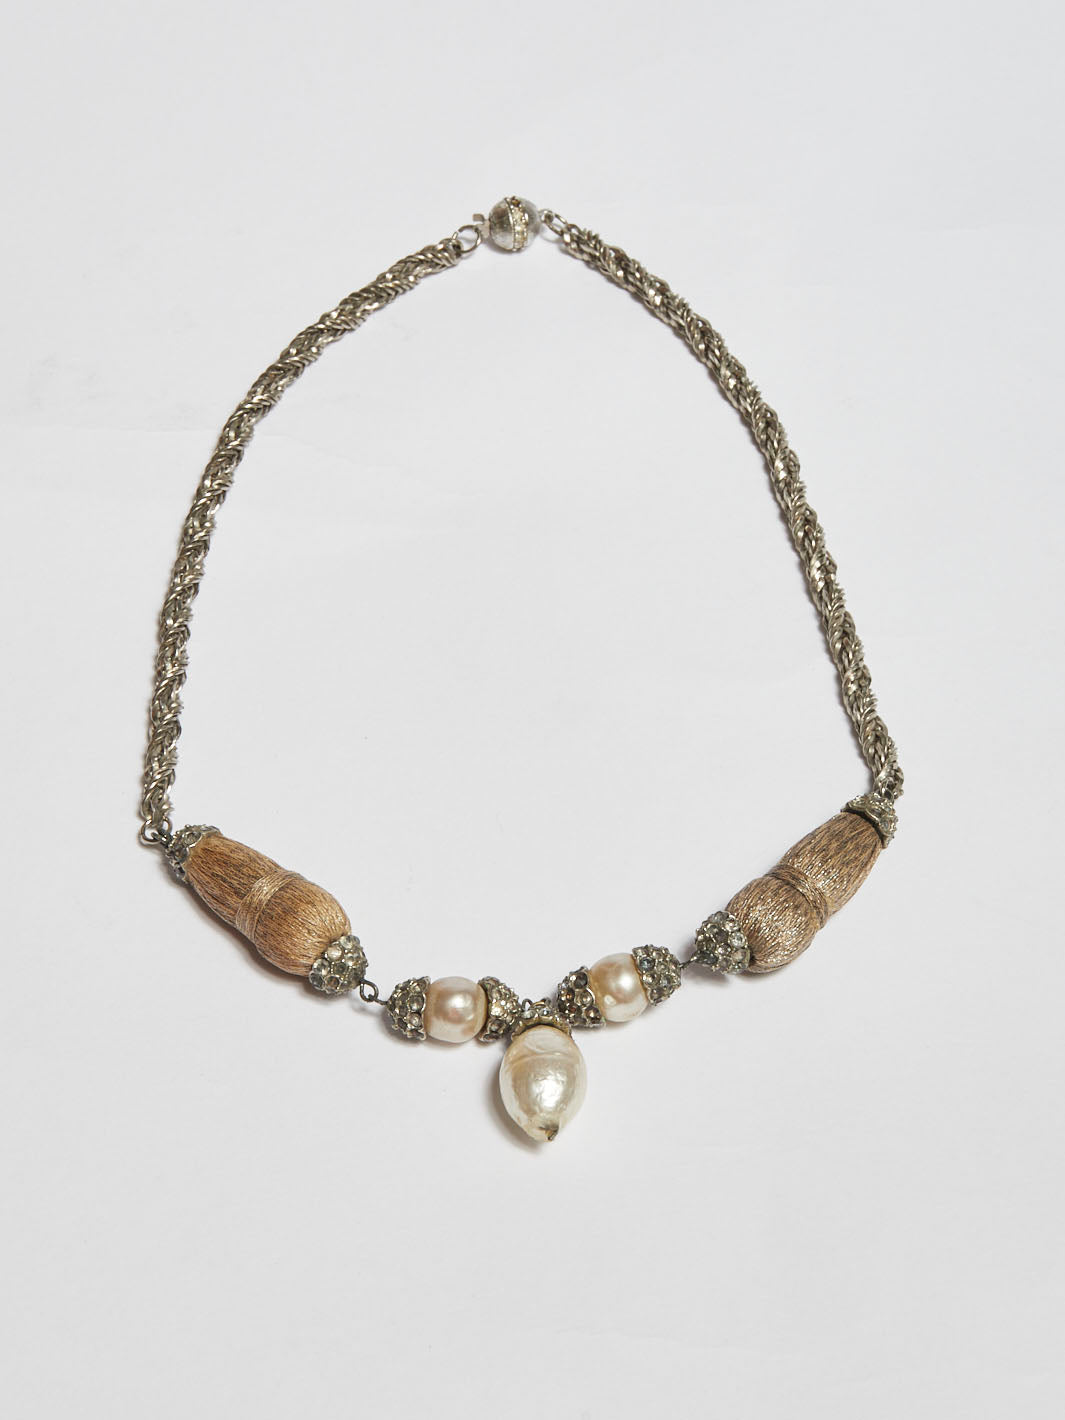 1980s Bozart silver byzantine mesh choker necklace with fresh pearls